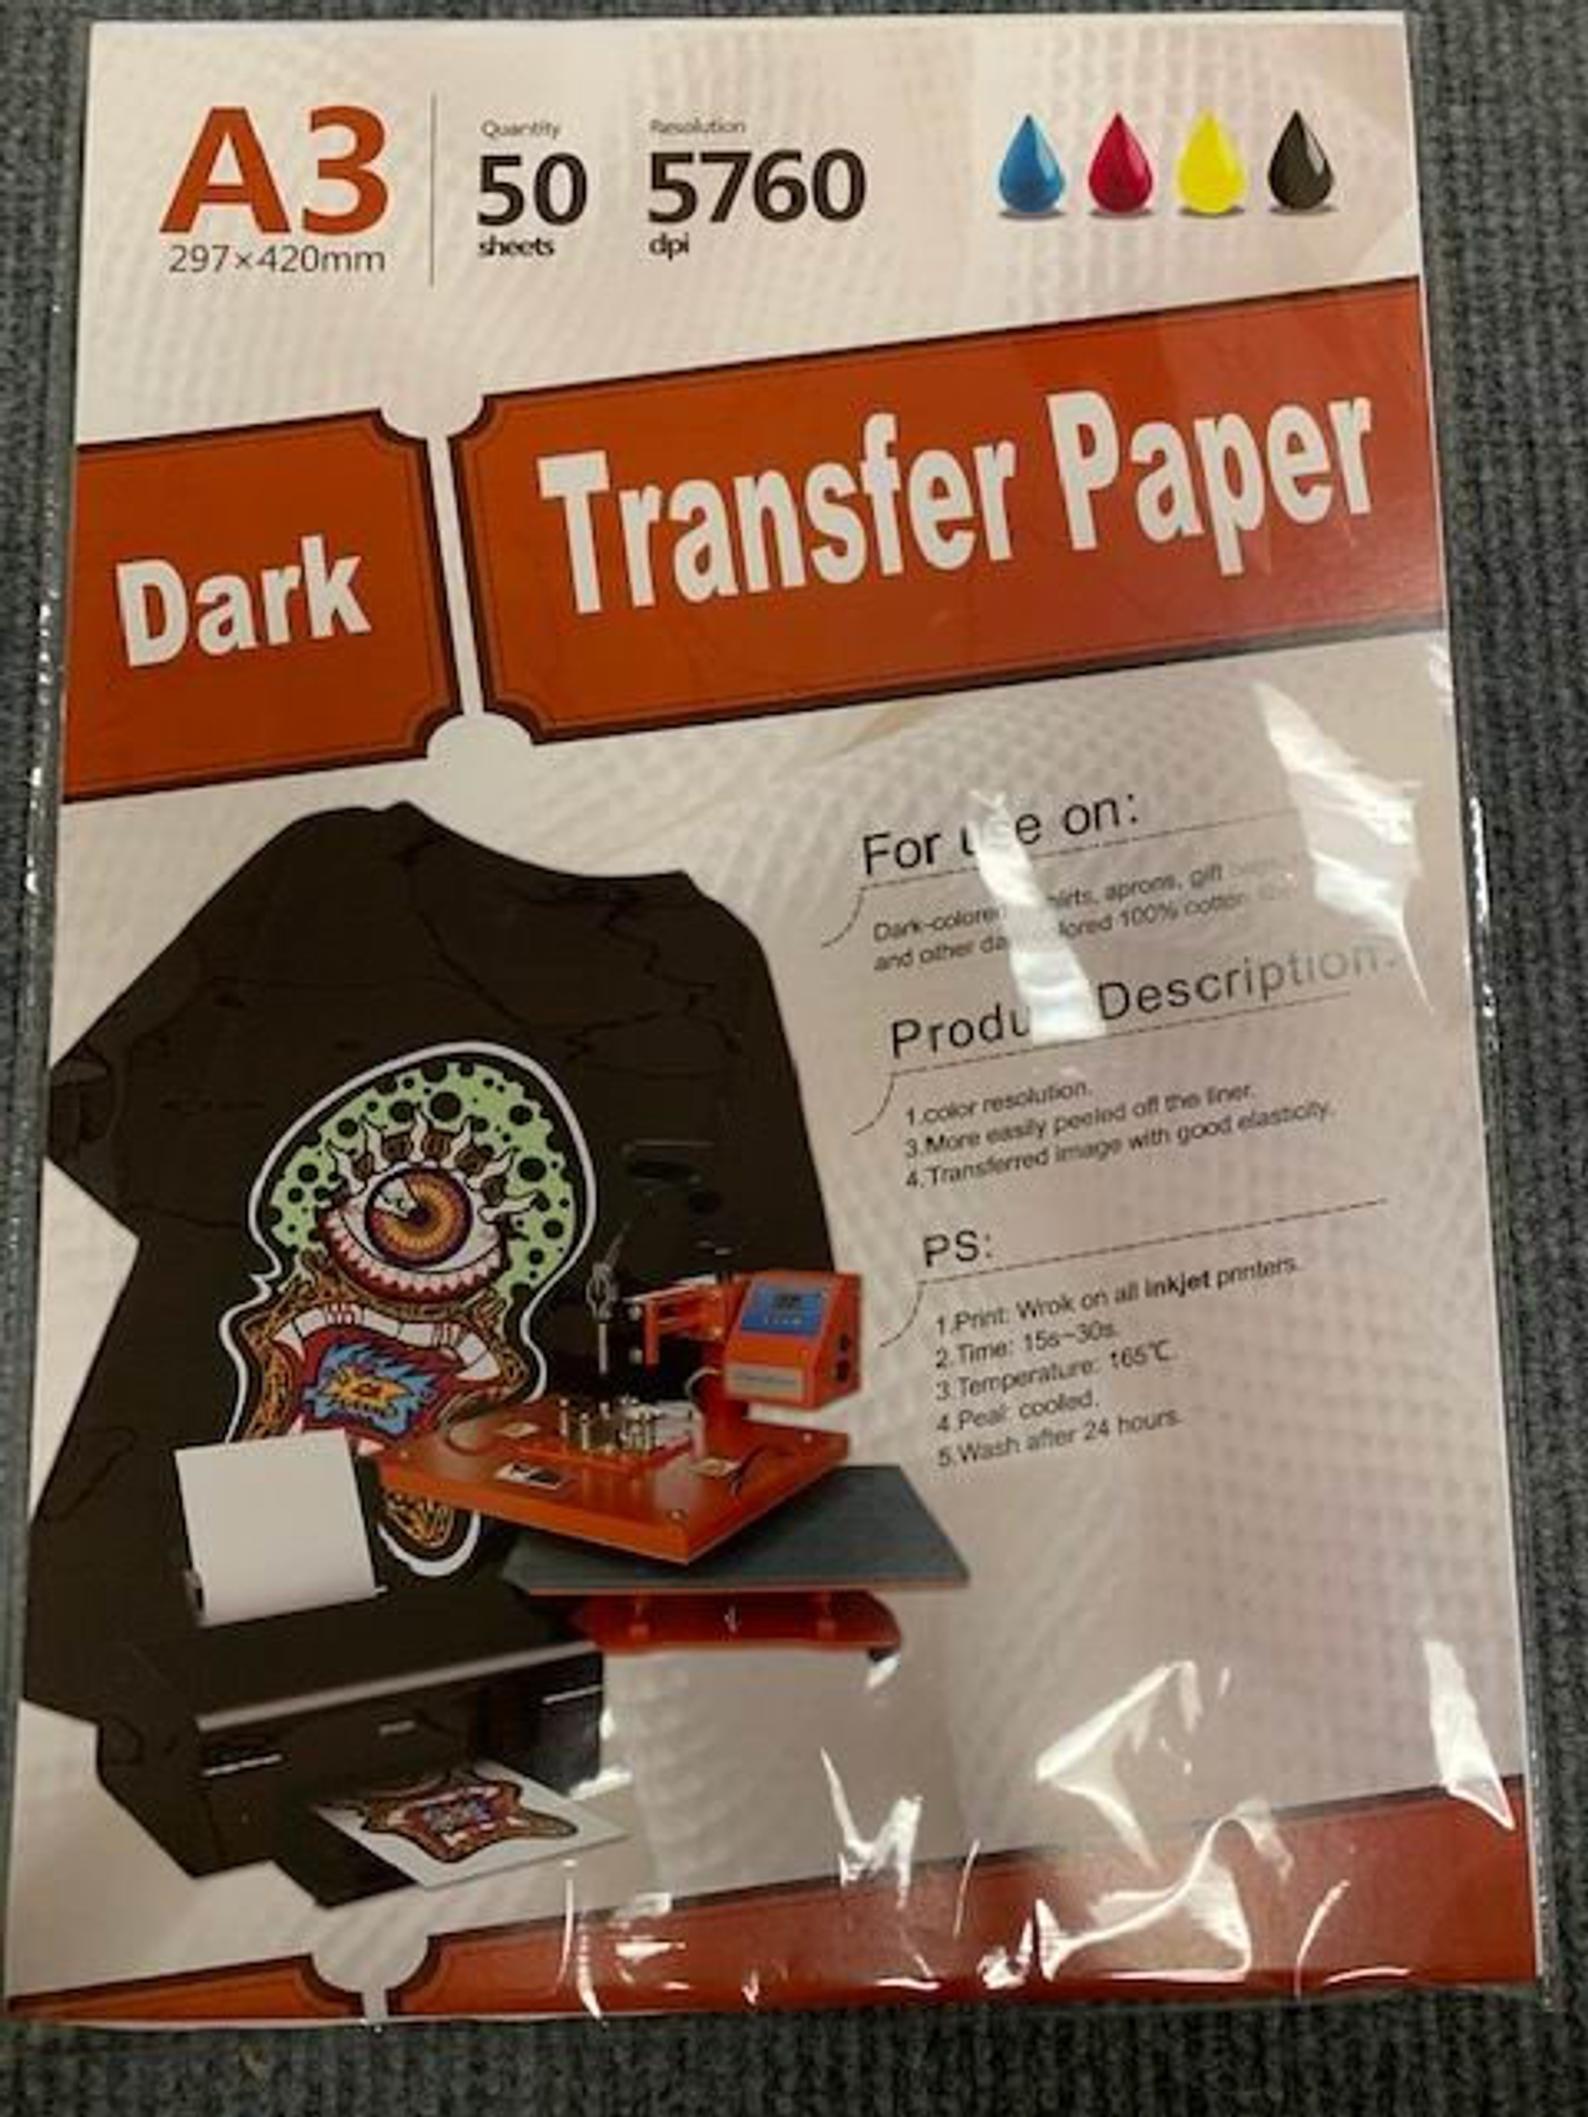 New Inkjet Iron-On Heat Transfer Paper For Dark fabric 50 Sheets